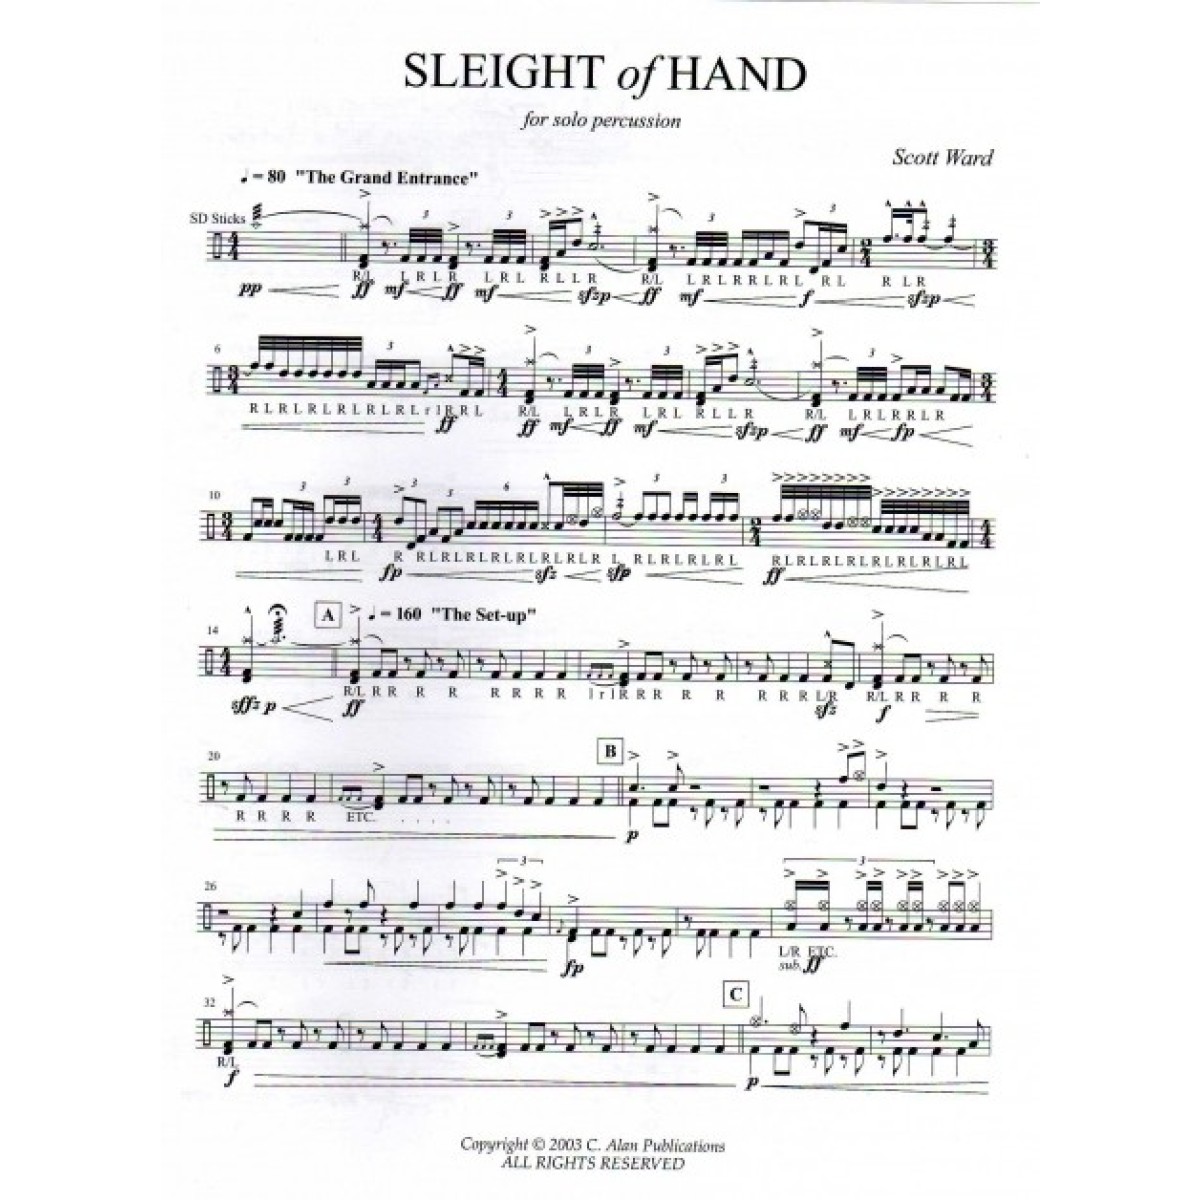 Sleight of Hand by Scott Ward